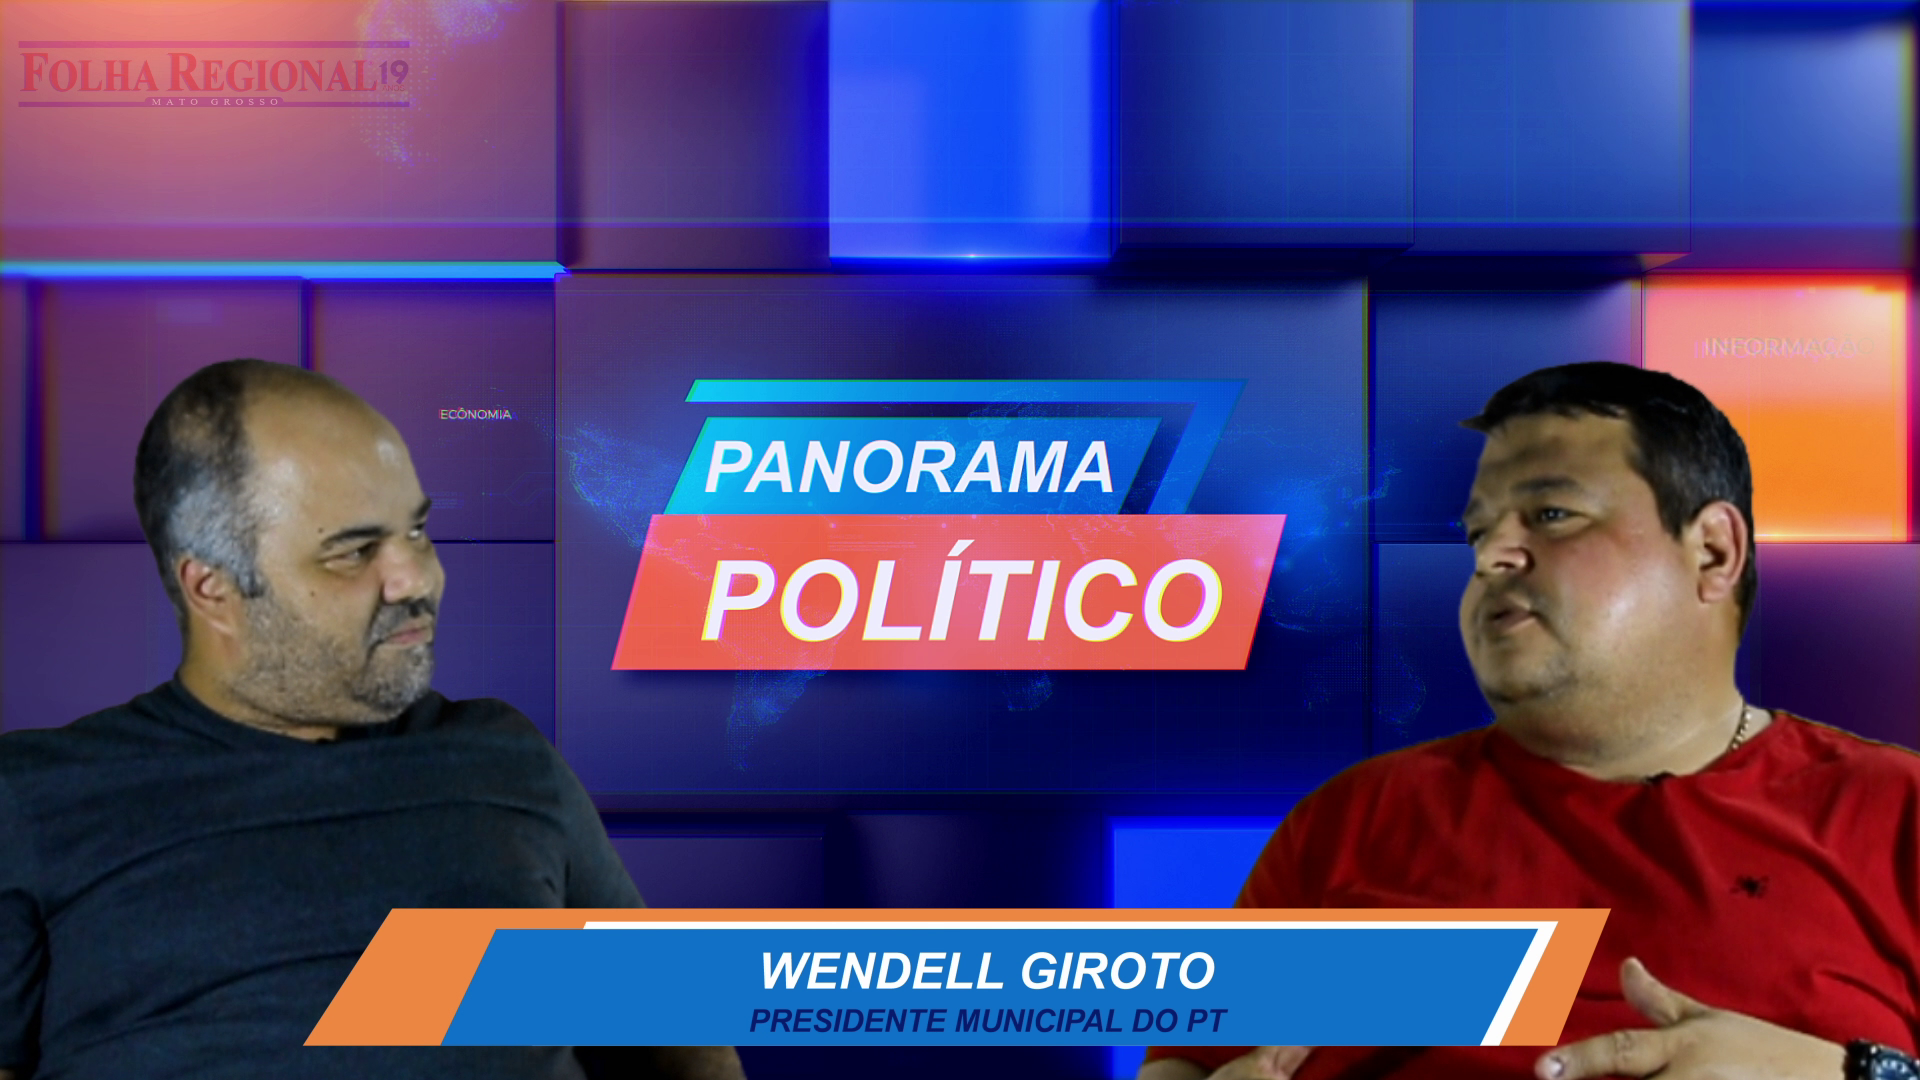 PANORAMA POLITICO - Wendell Giroto